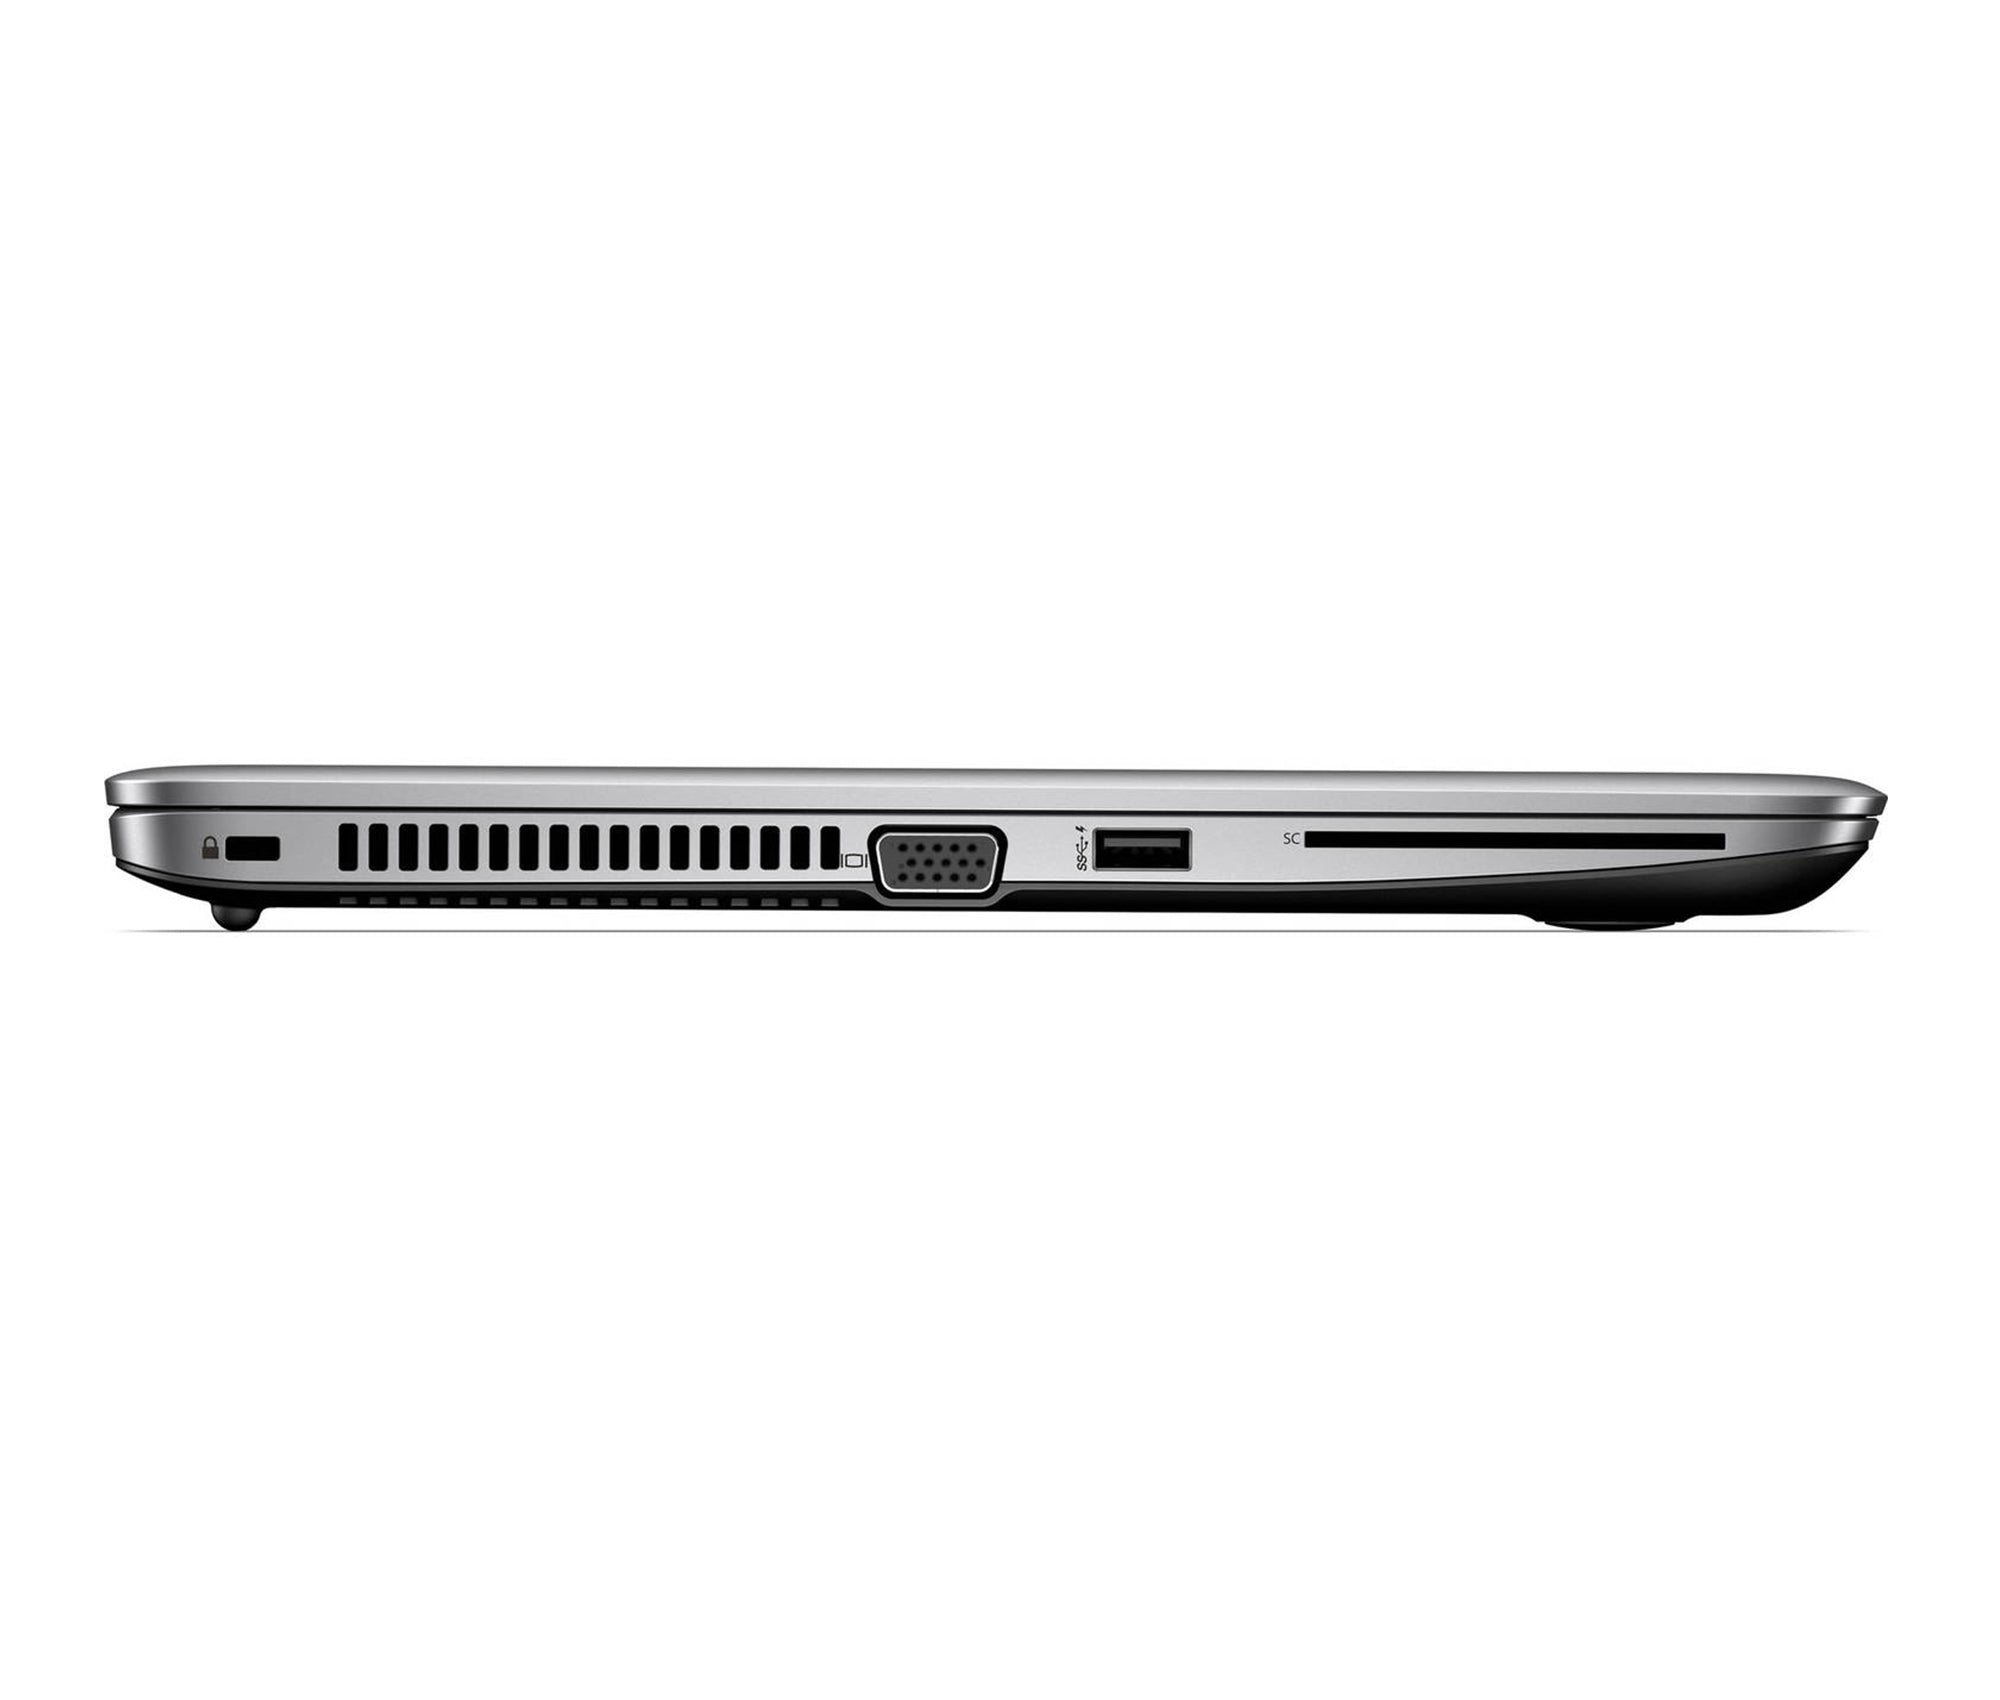 Pc Portable HP EliteBook 840 G3 Core i5 6200U - 8 Go RAM 256 Go